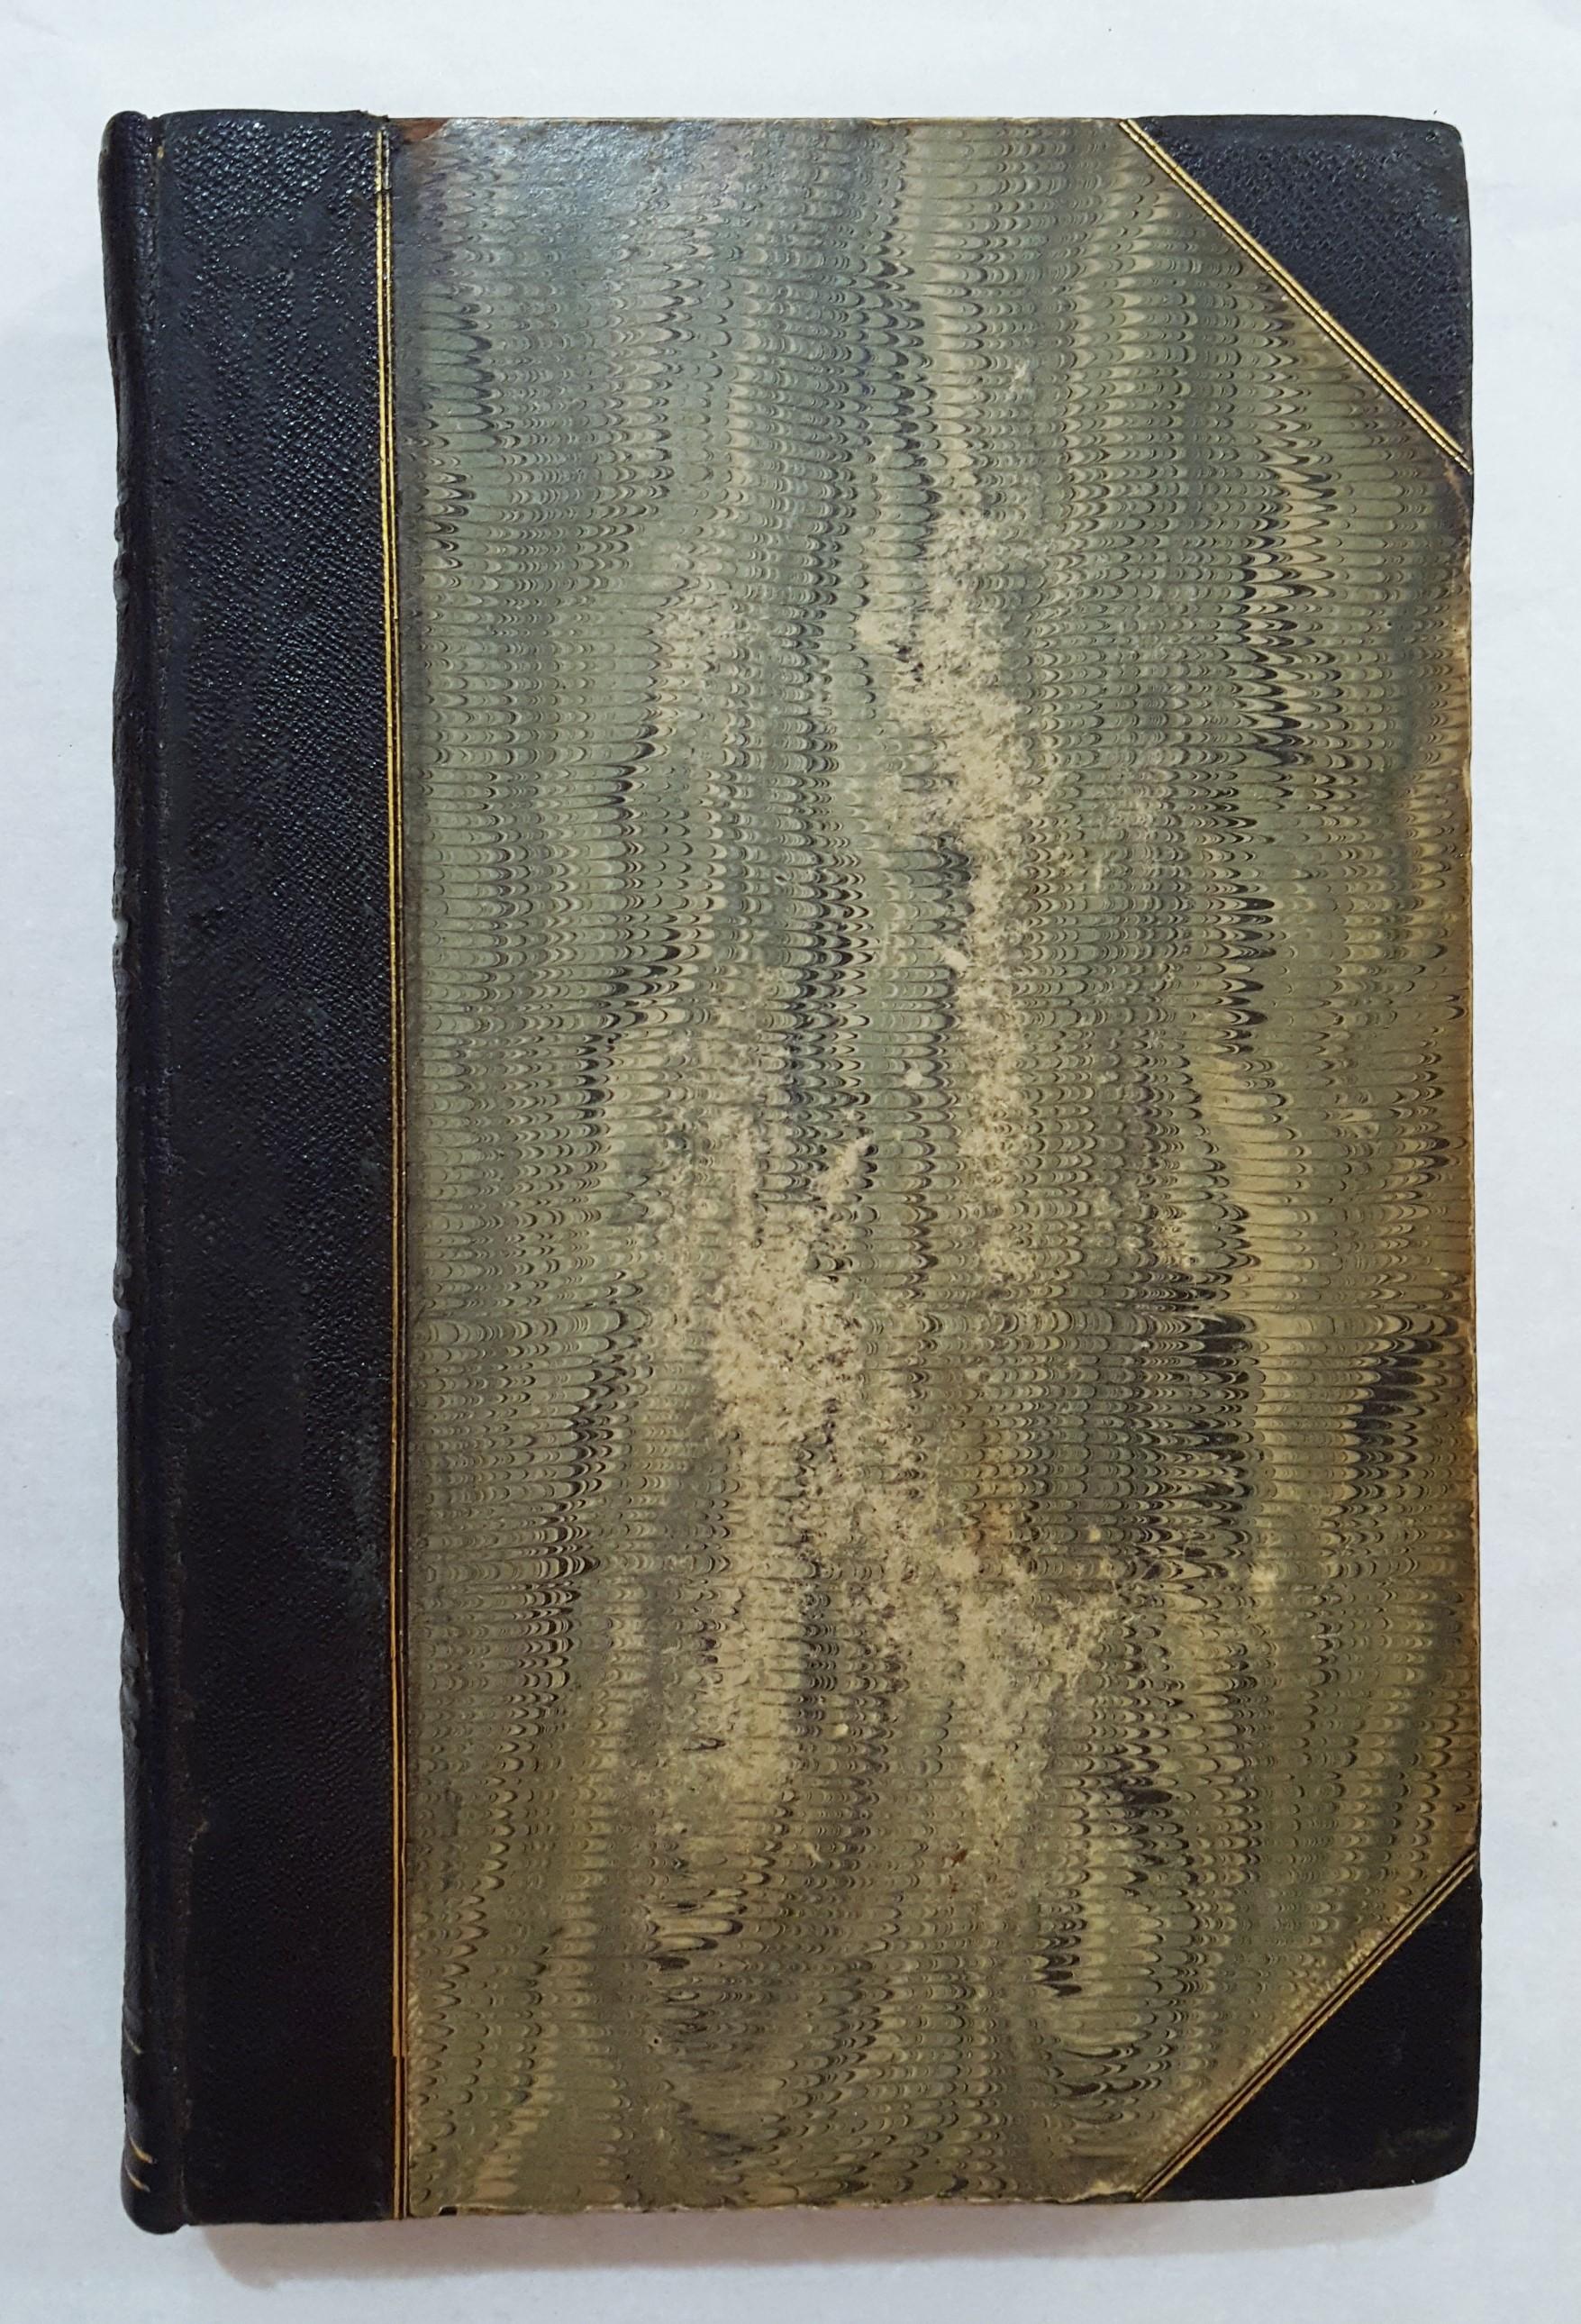 The Birds of America, First Royal Octavo Edition (Vol. I) - Print by John James Audubon